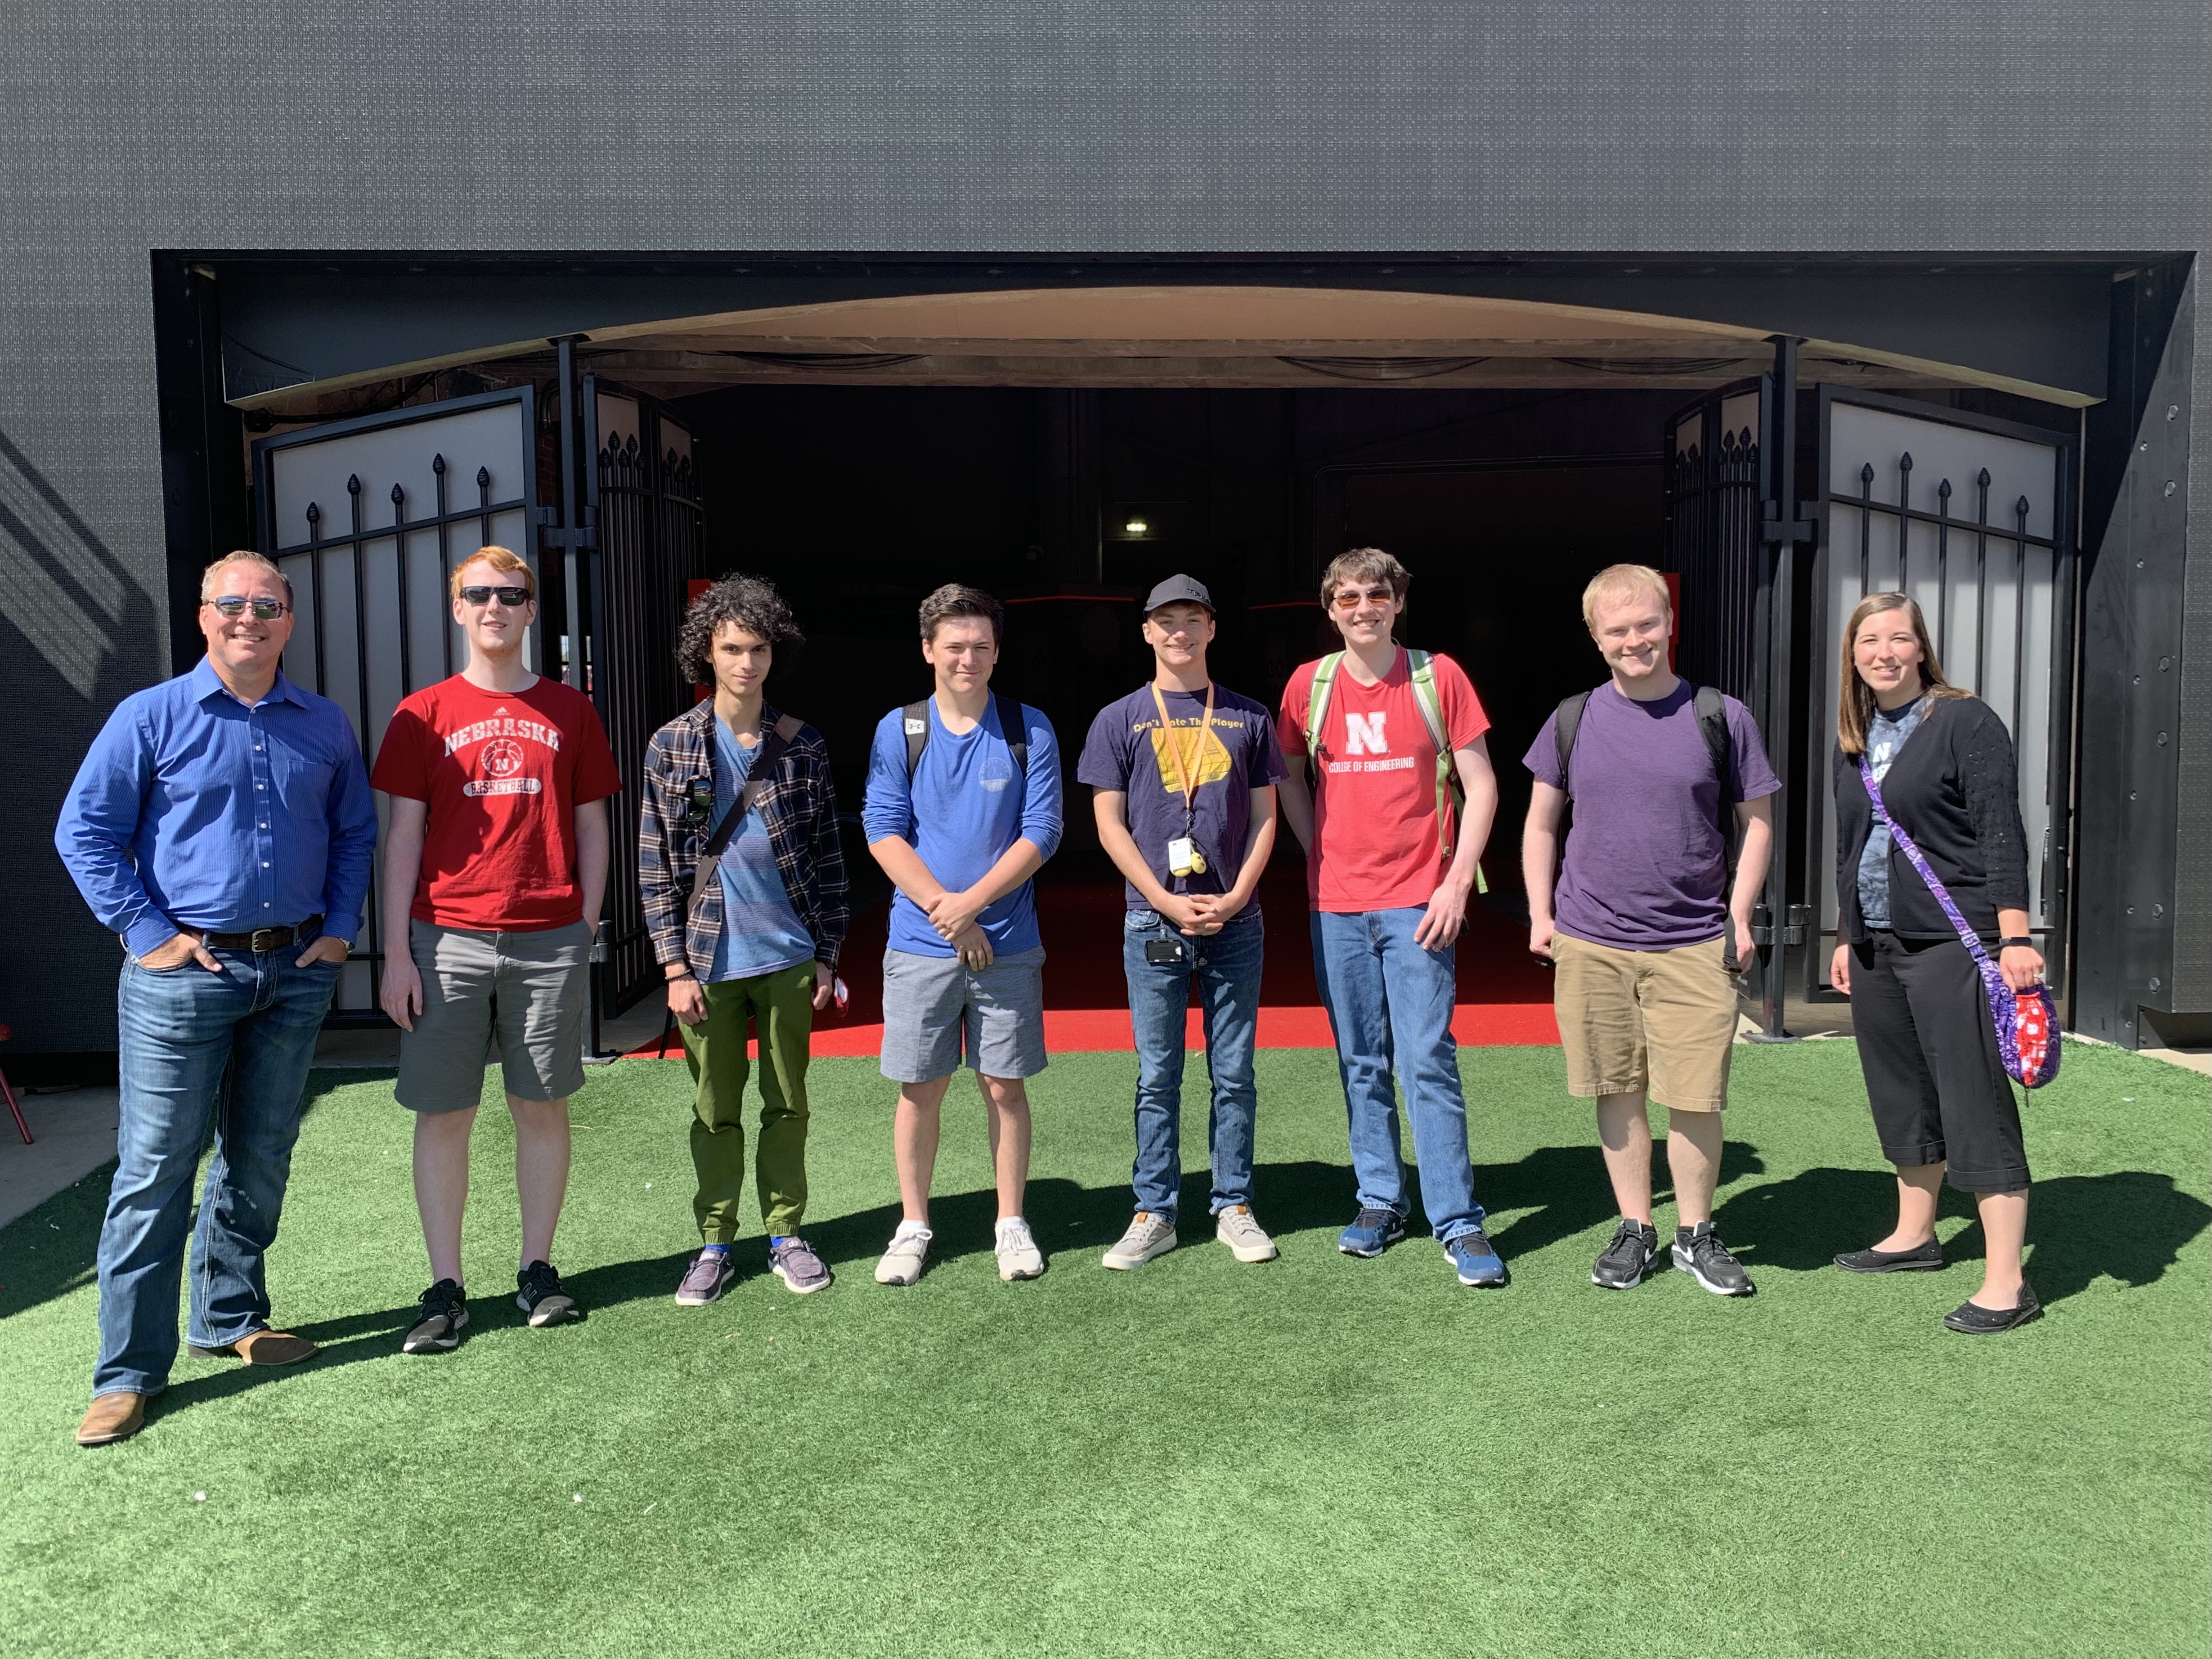 The Husker STEM VR Team from left to right: Jeff Falkinburg, Tyler Senne, Connor Unger, Ryan Schumacher, Parker Brown, Jackson Herman, Jackson Maschman, and Brittney Palmer.